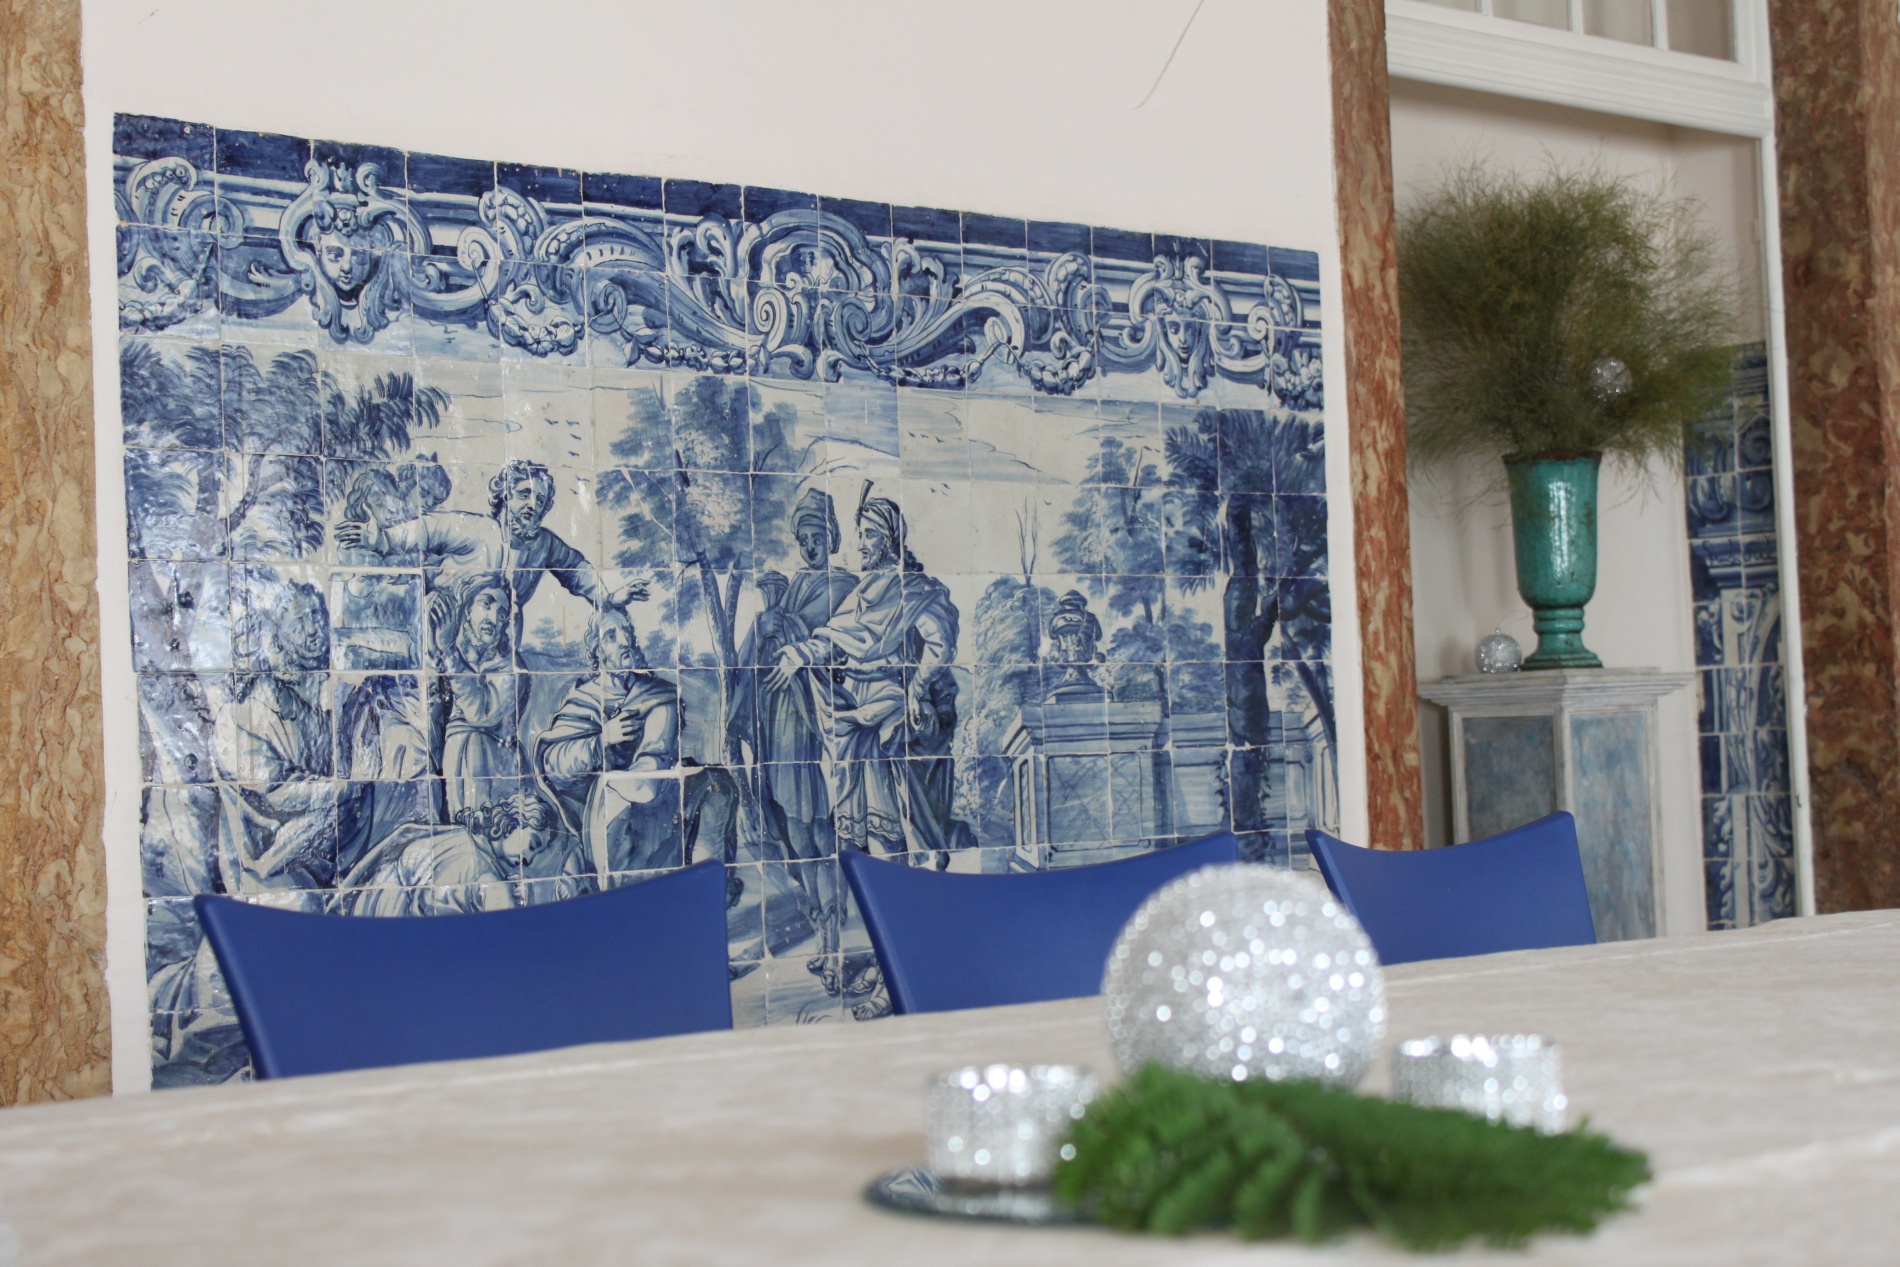 Azulejos cover the walls in Lisbon's exquisite Palacio Belmonte hotel.